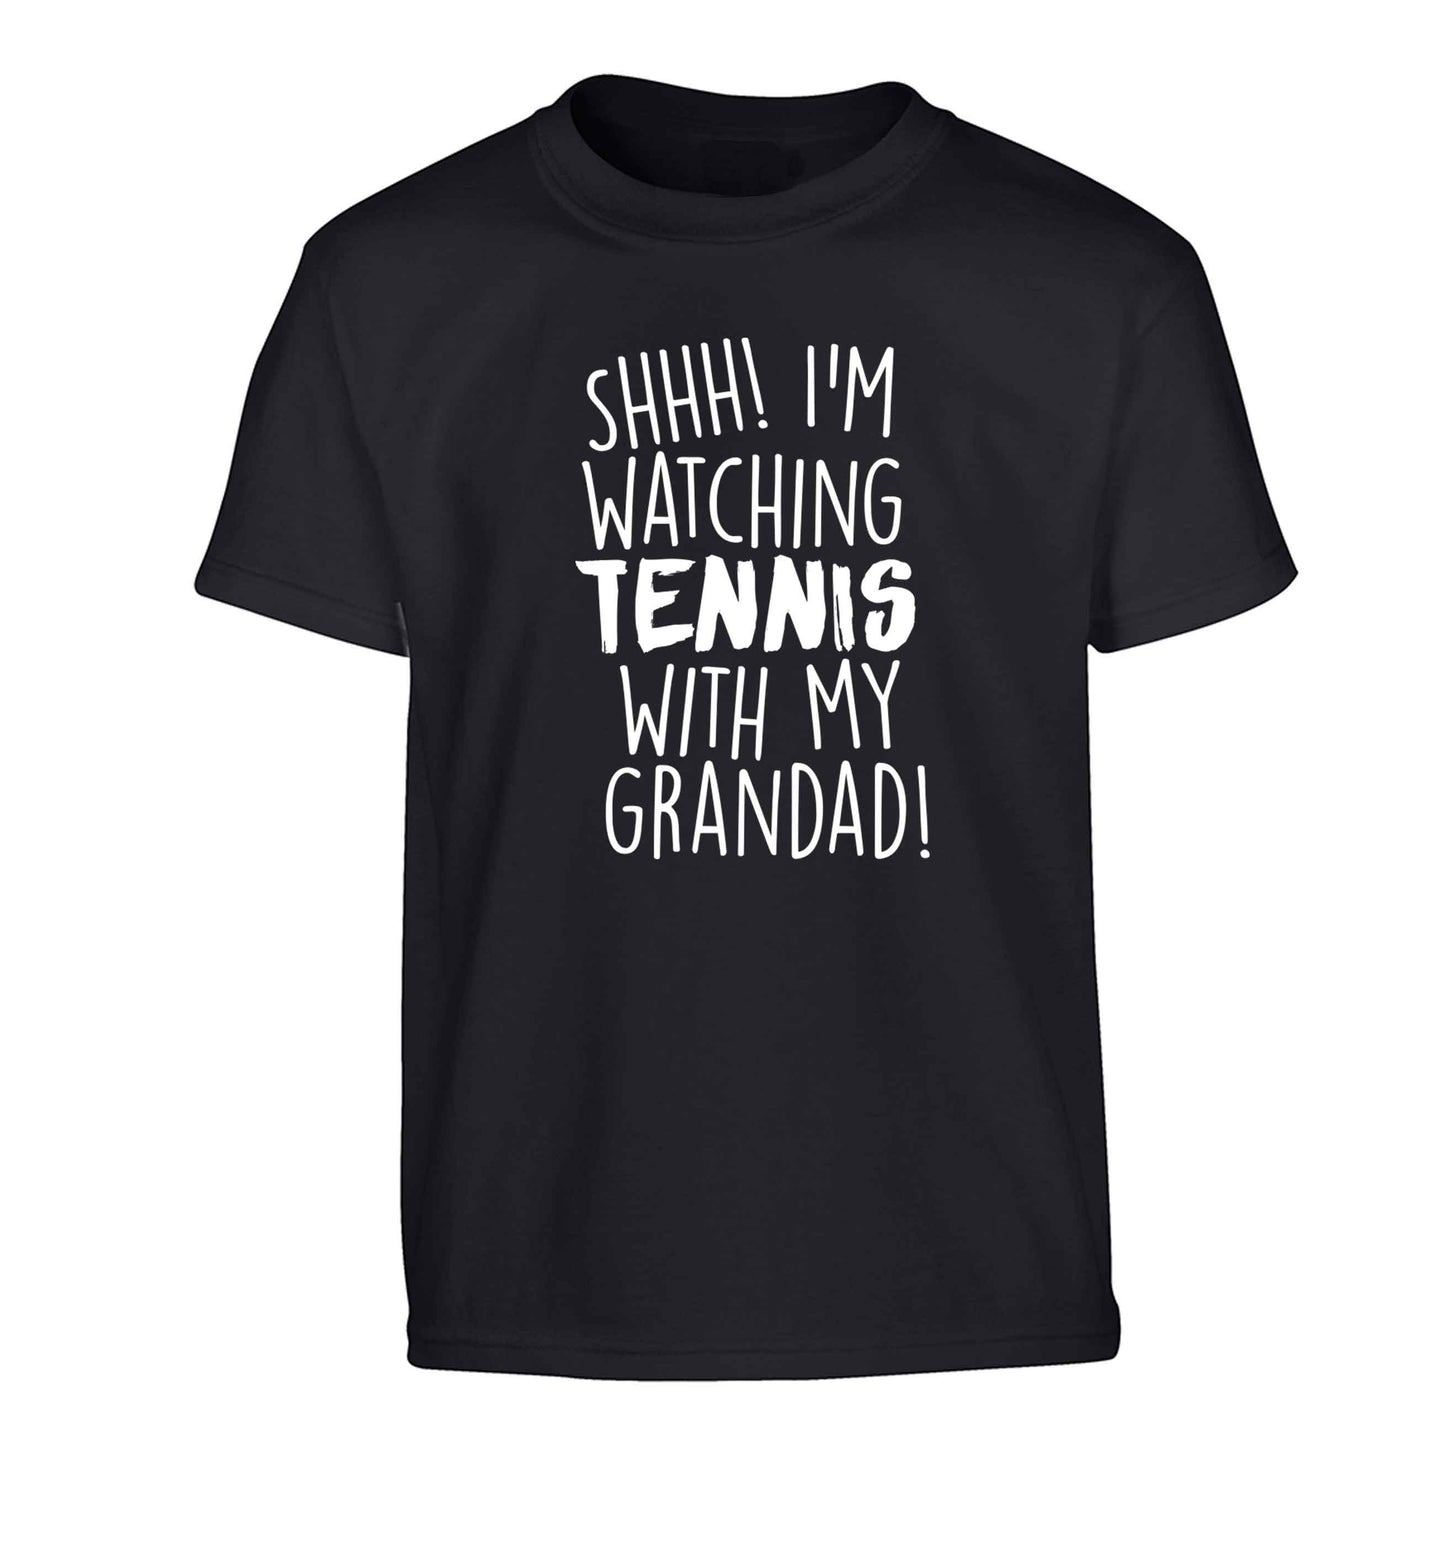 Shh! I'm watching tennis with my grandad! Children's black Tshirt 12-13 Years